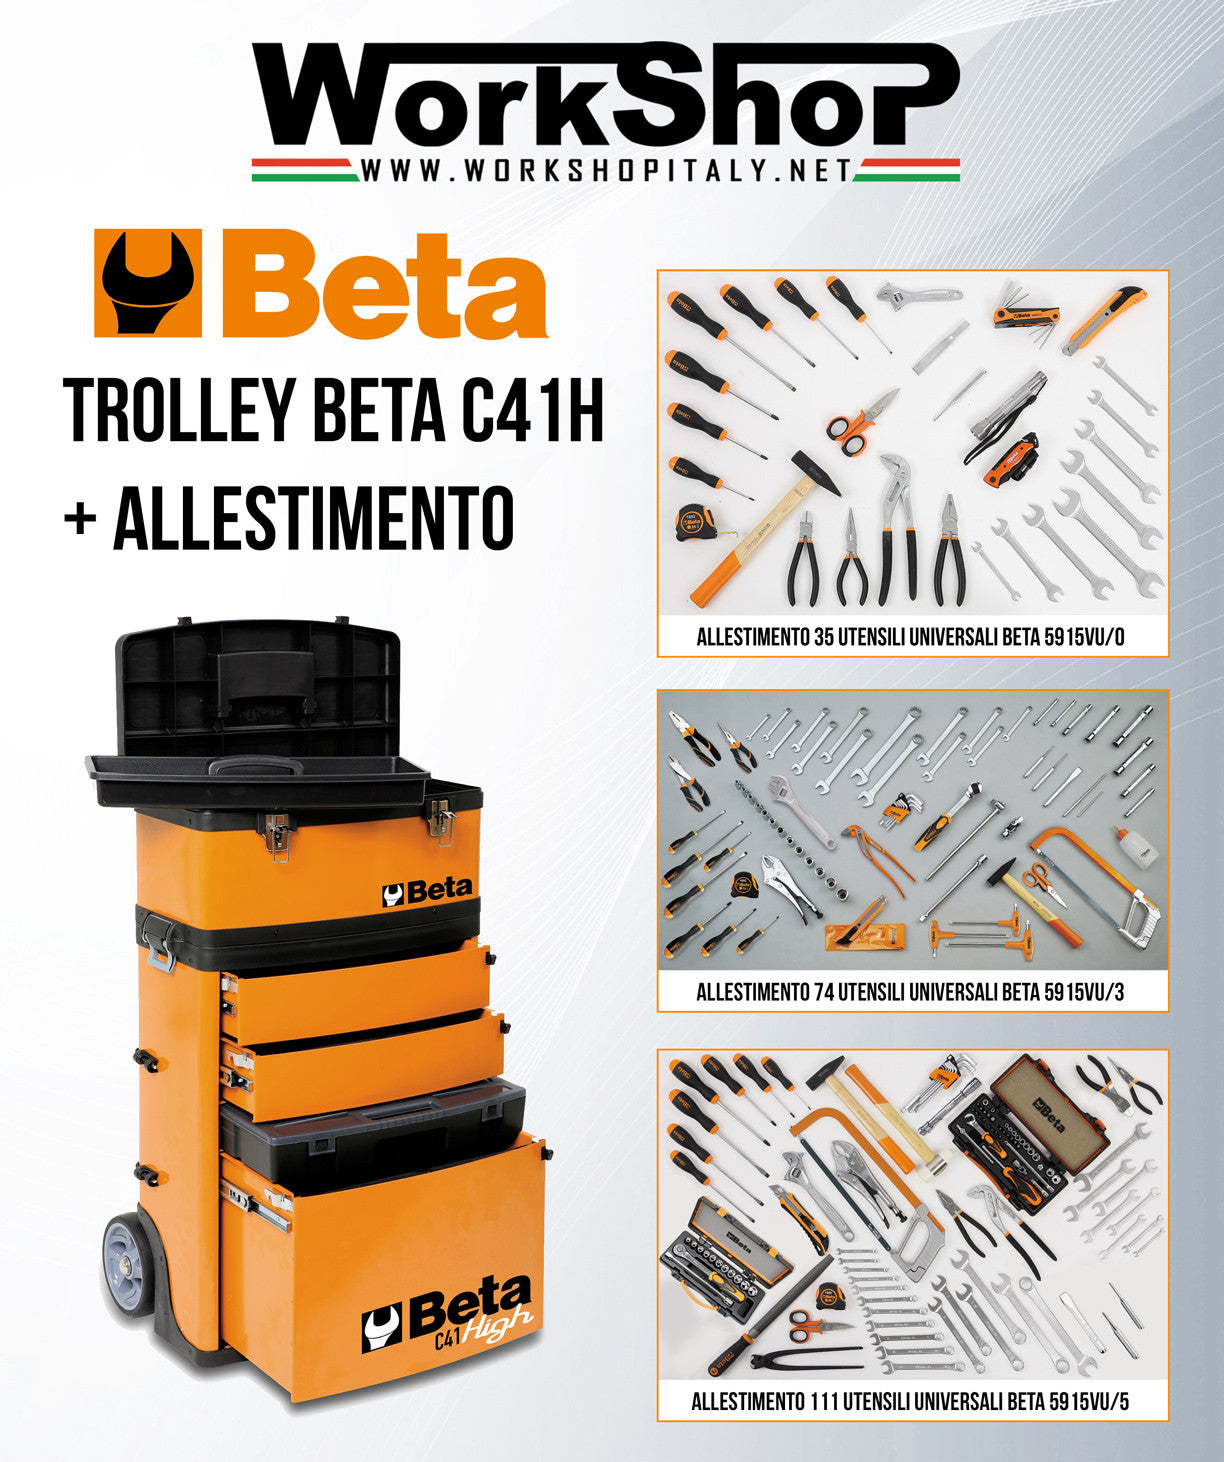 Trolley Beta C41H + Allestimento a scelta